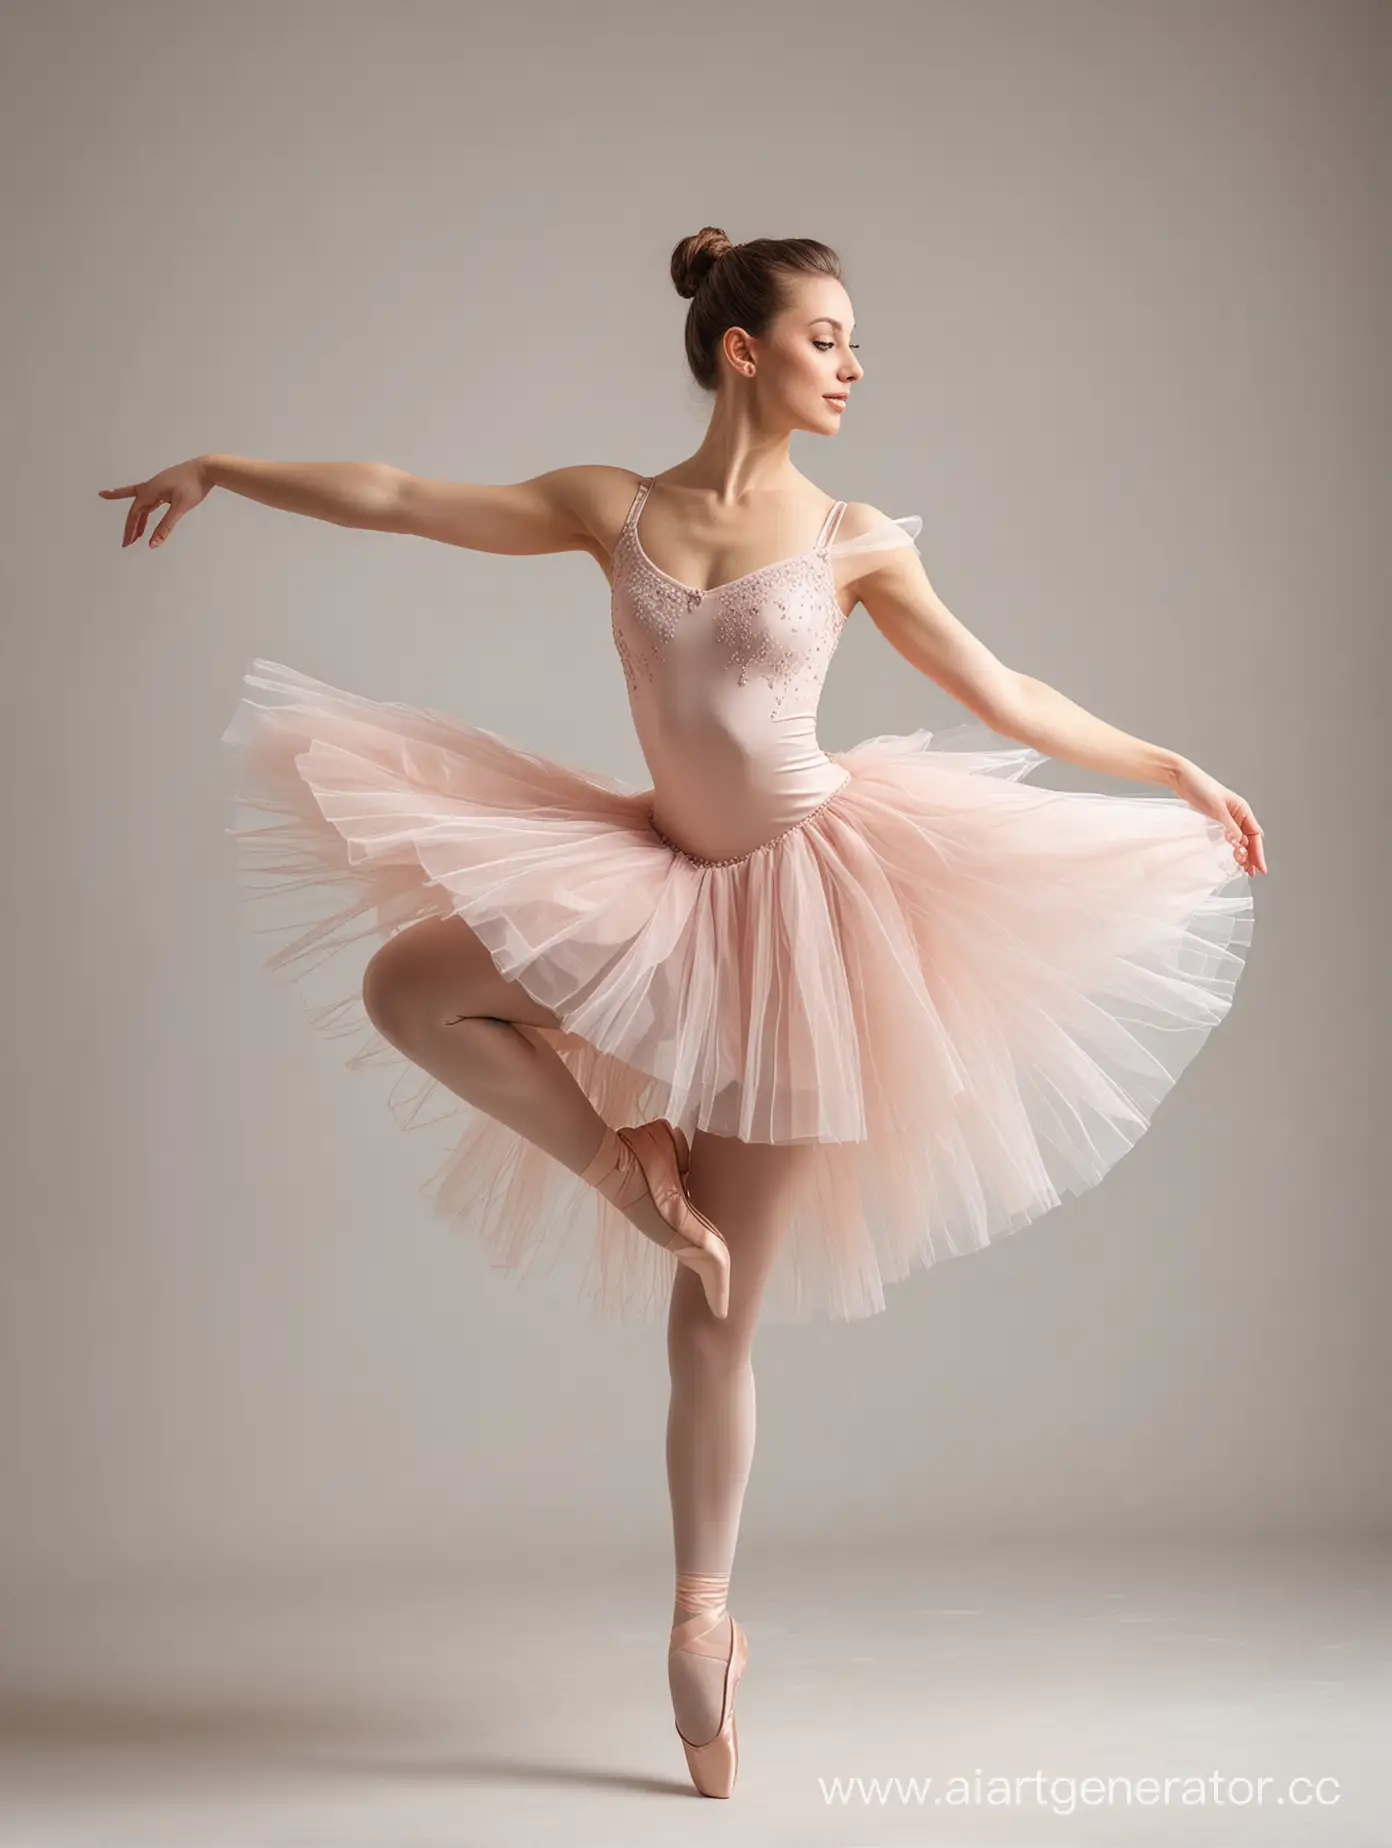 Graceful-Ballerina-Dancing-in-Ethereal-Light